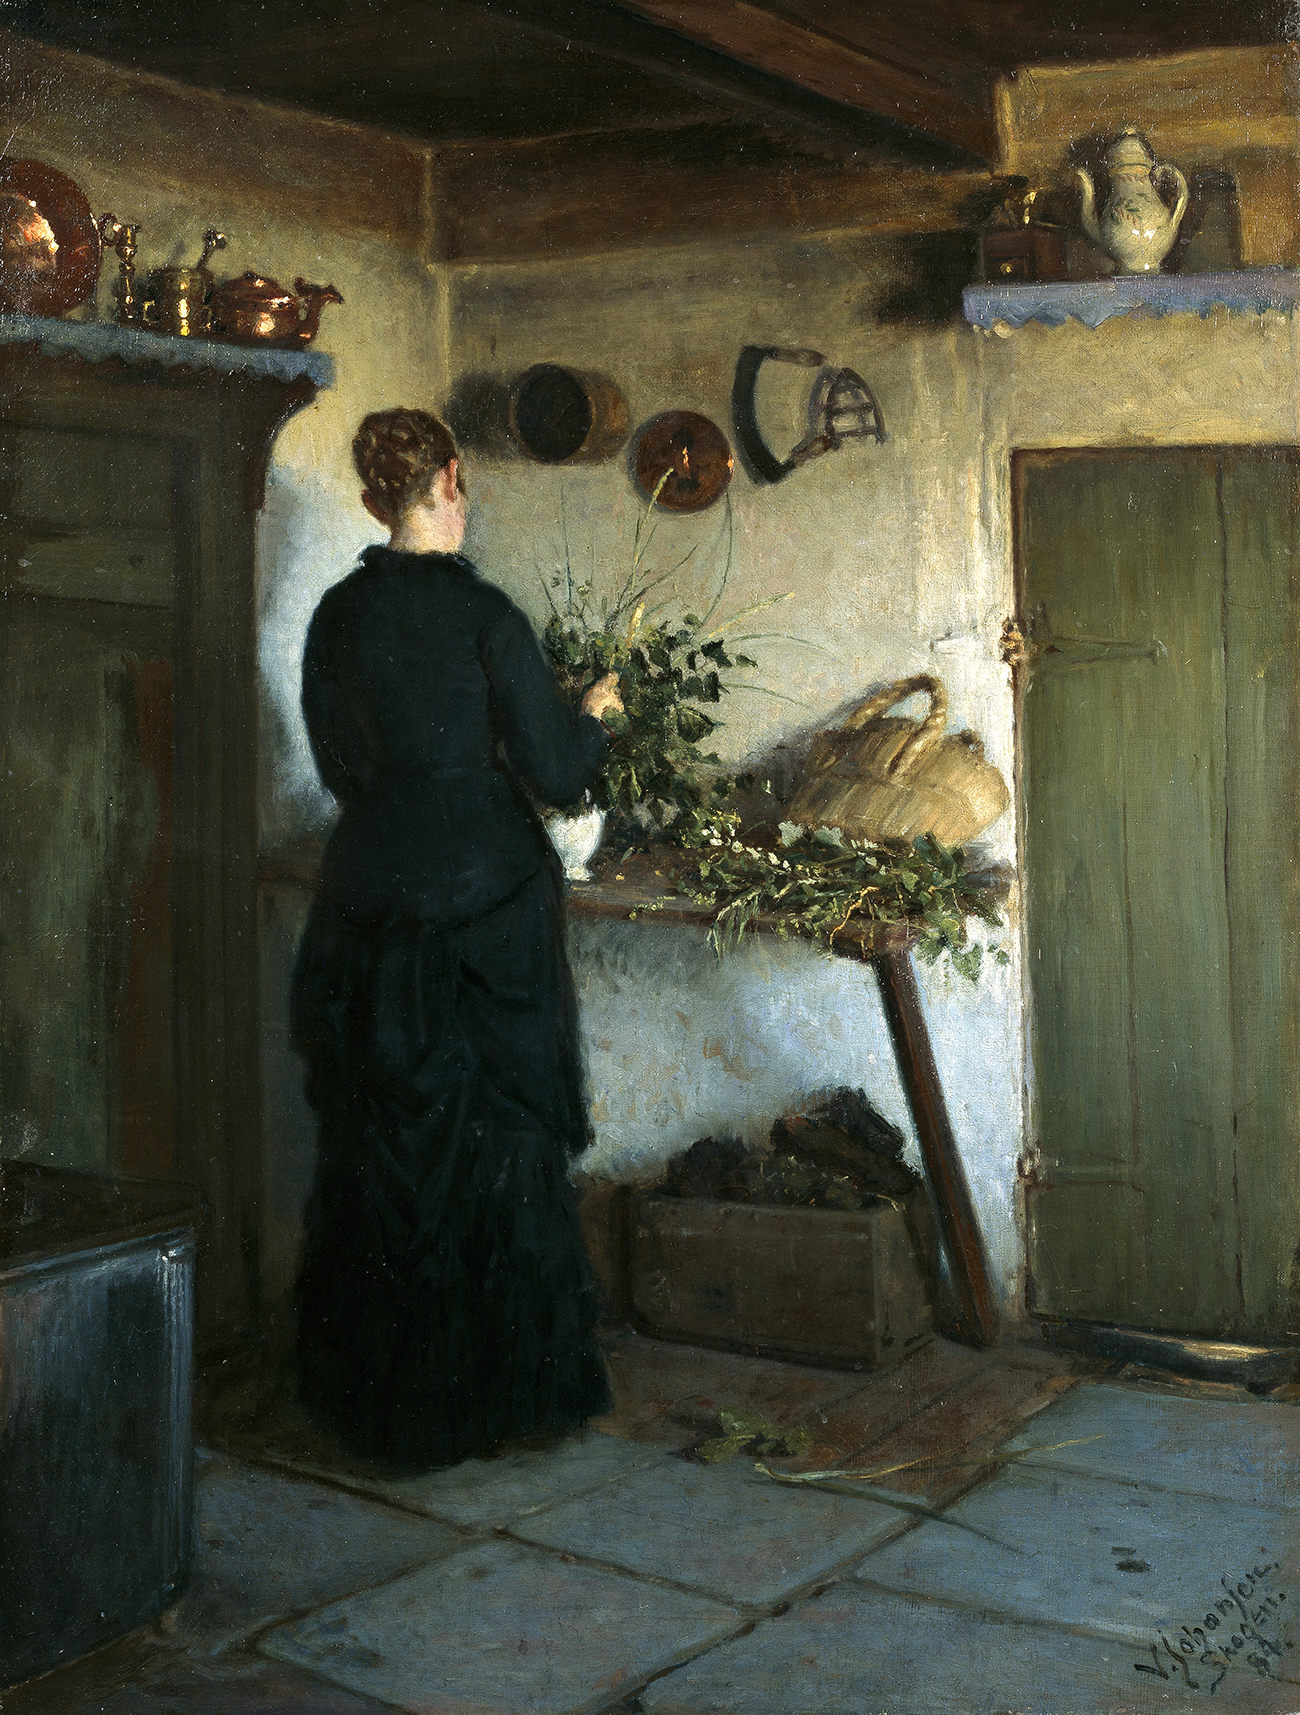 Kitchen interior. The artist's wife arranging flowers by Viggo Johansen - 1884 - 84 x 64 cm Skagens Kunstmuseer